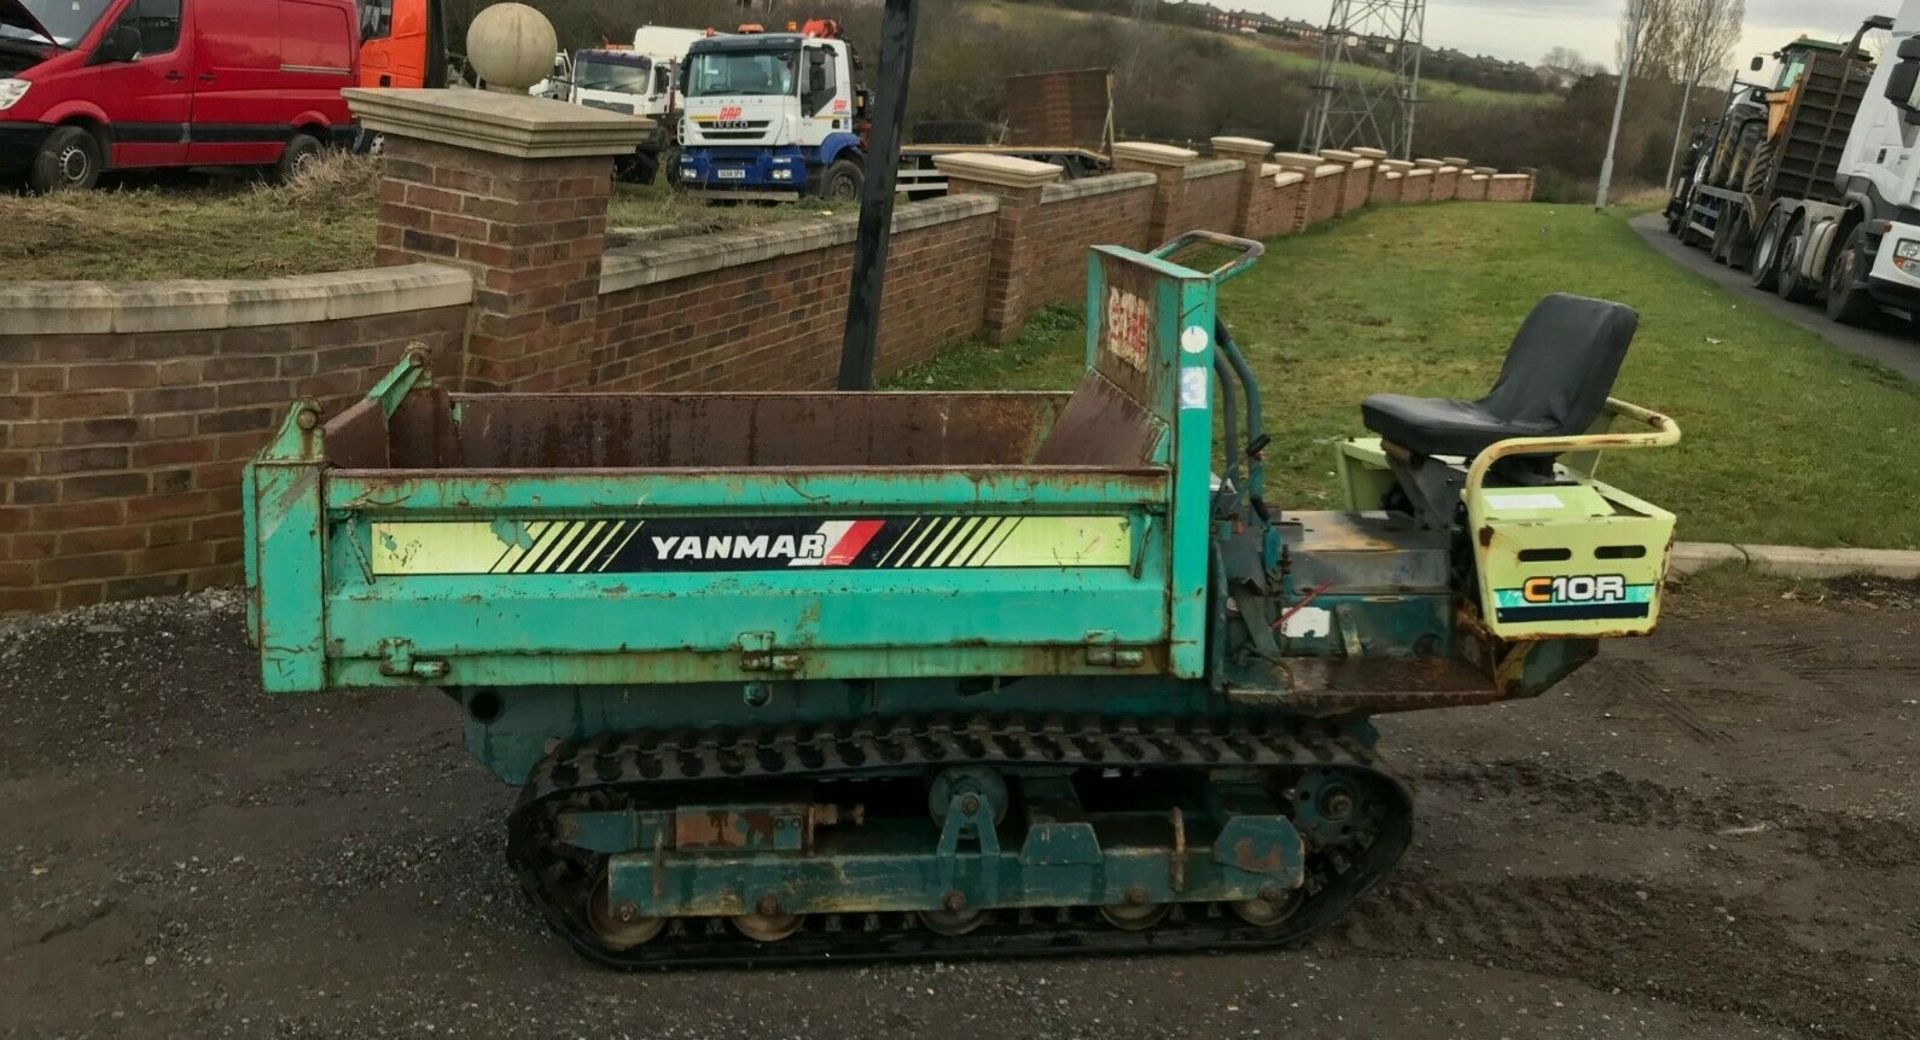 Yanmar C10R Tracked Dumper - Image 8 of 9